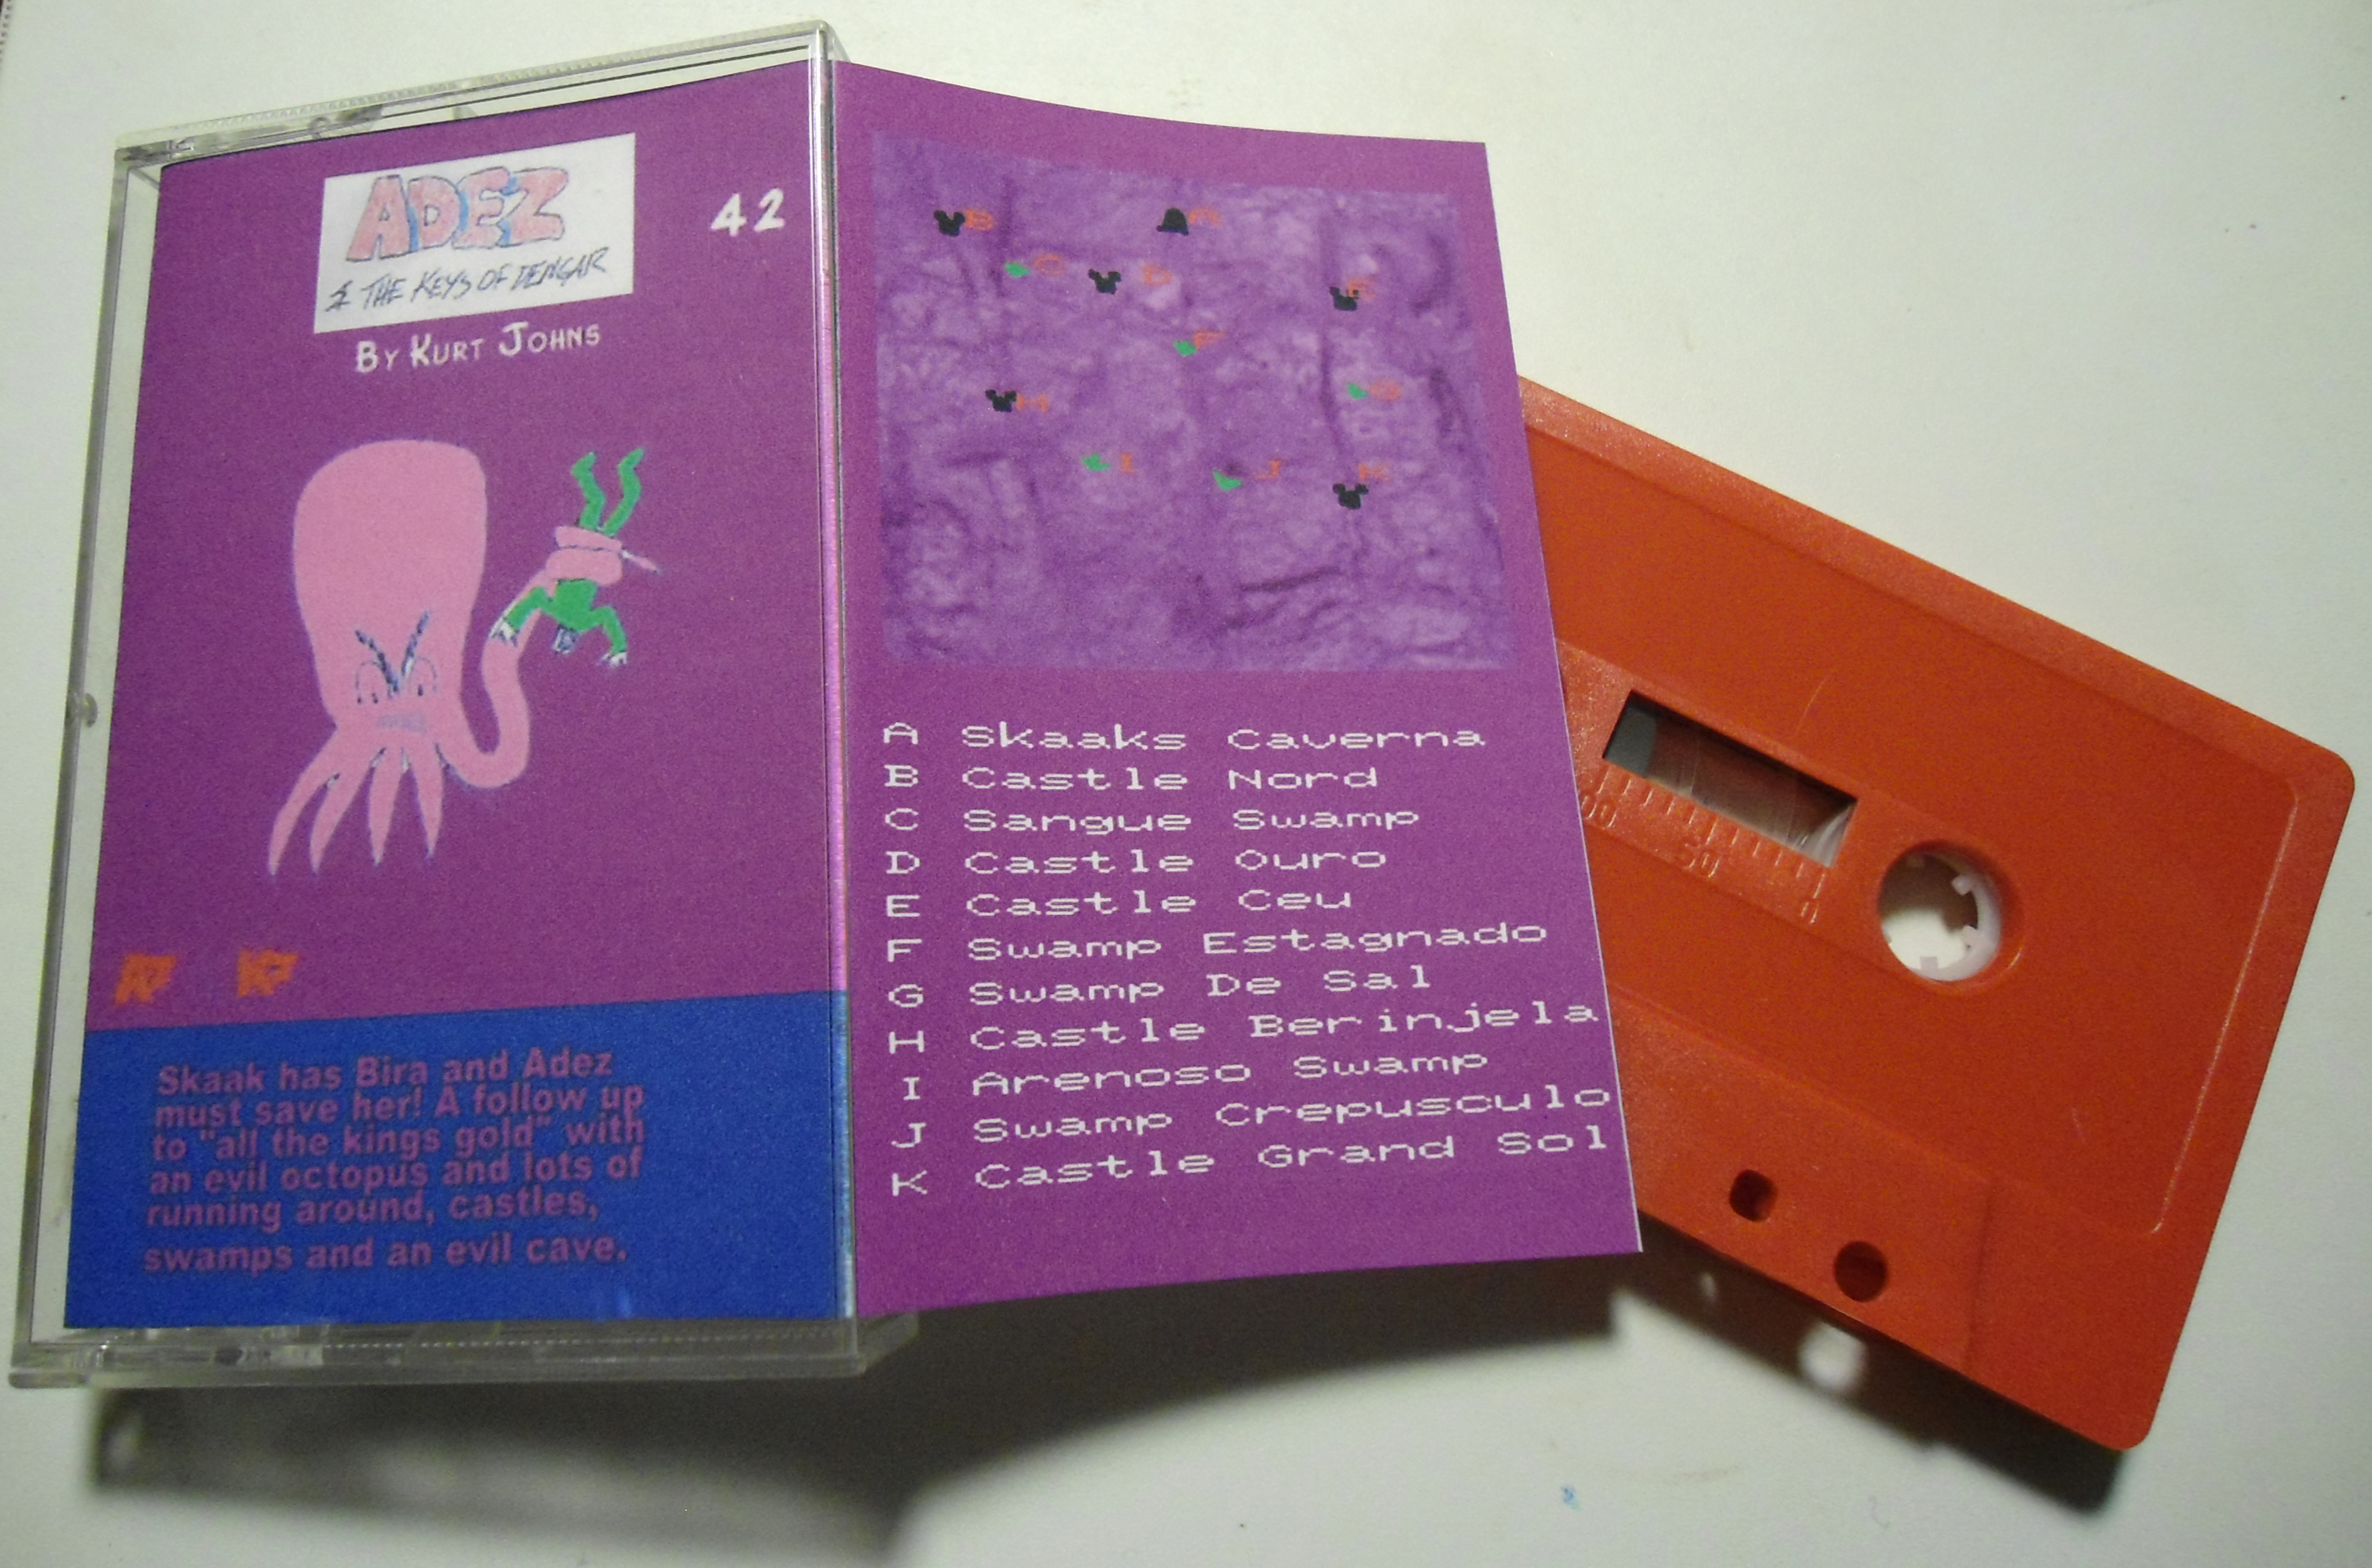 The cassette